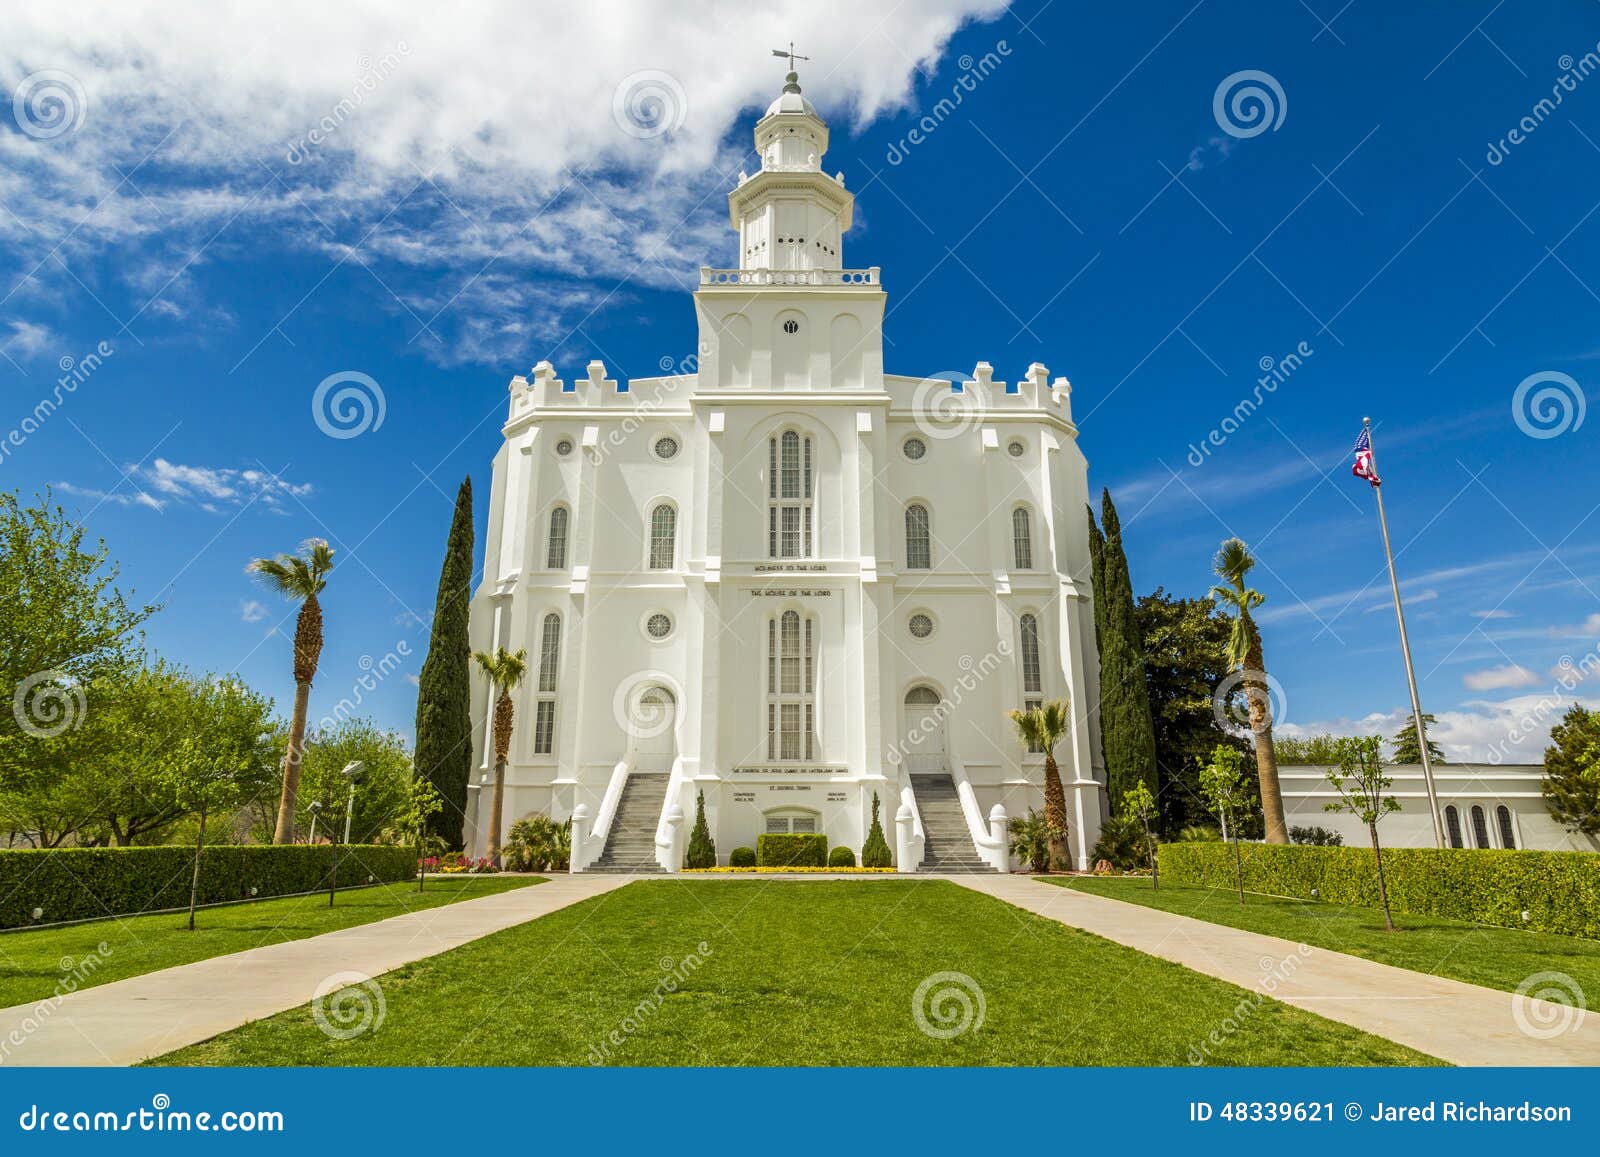 lds mormon temple in st. george utah